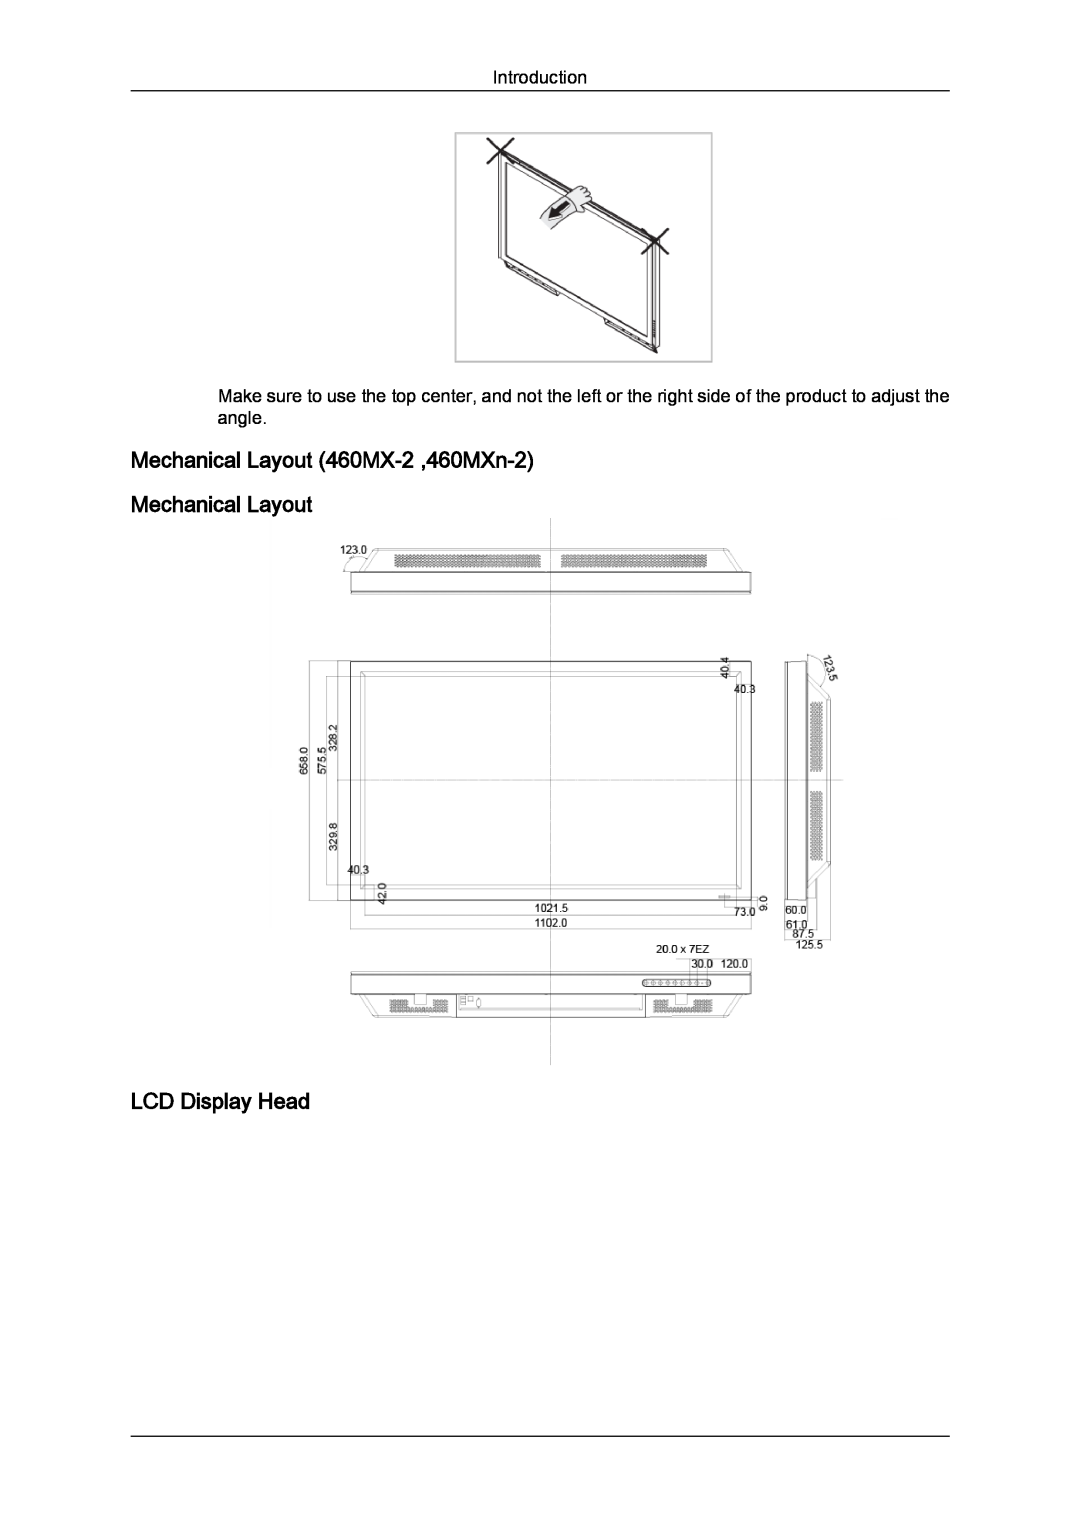 Samsung LH40MGQLBC/EN, LH40MGUMBC/EN Mechanical Layout 460MX-2 ,460MXn-2 Mechanical Layout, LCD Display Head, Introduction 